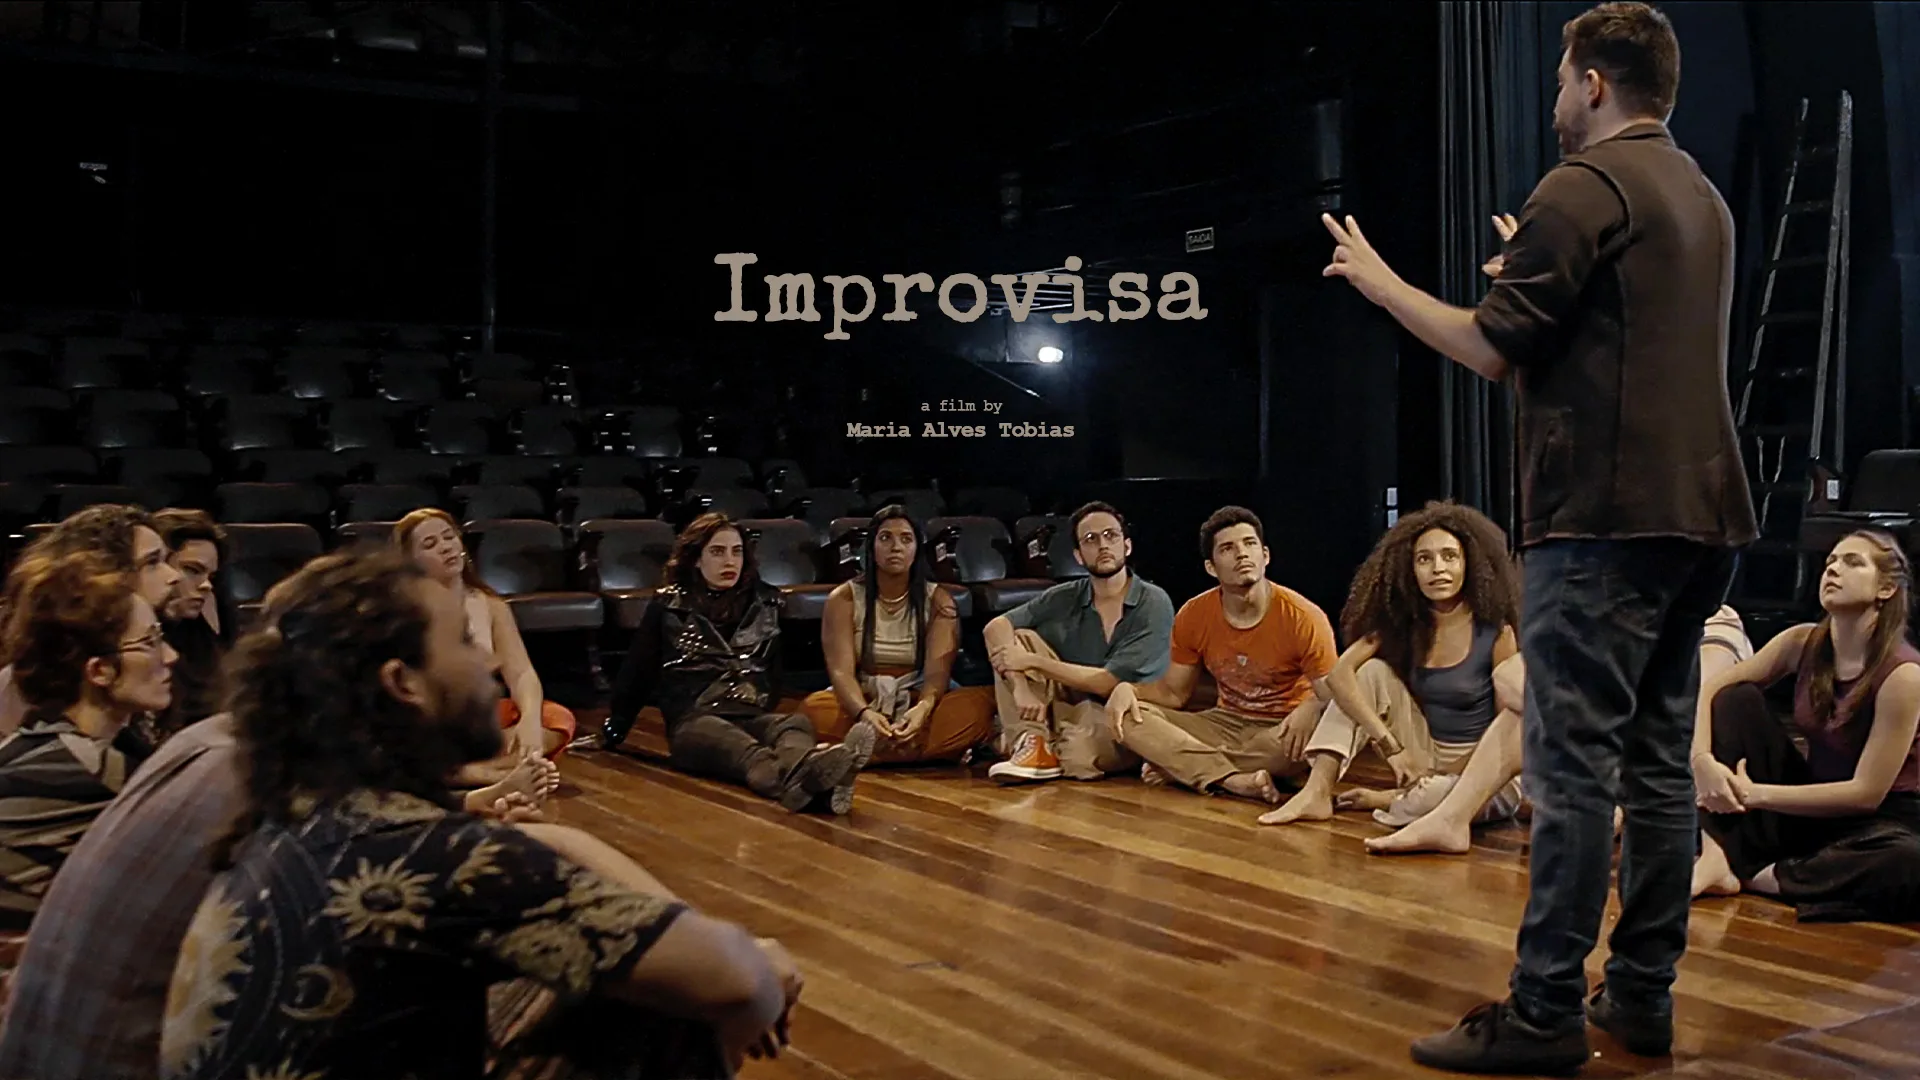 Distribution of the short film "Improvisa" by Maria Alves Tobias